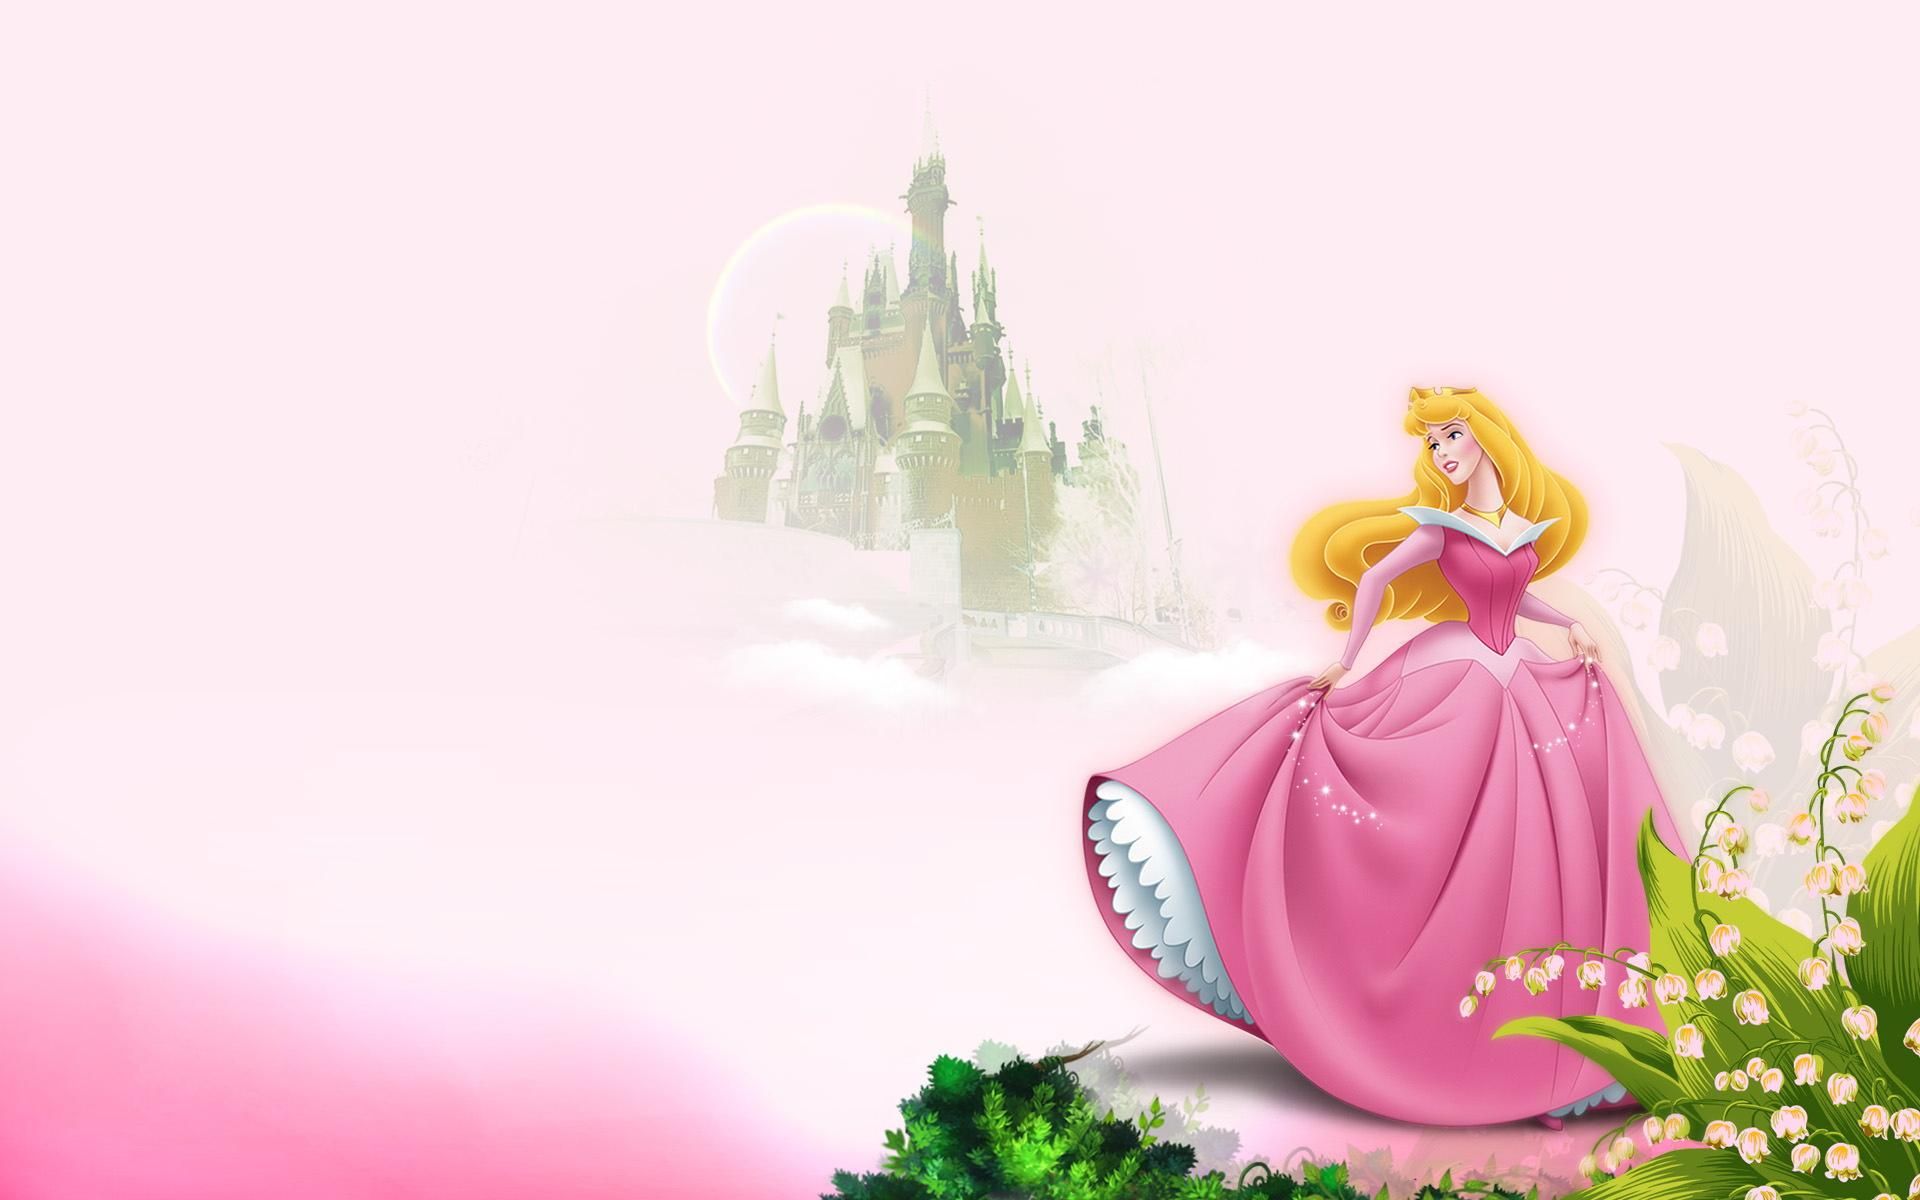 Princess Wallpaper. Princess Wallpaper, Disney Princess Wallpaper and Princess Emoji Wallpaper